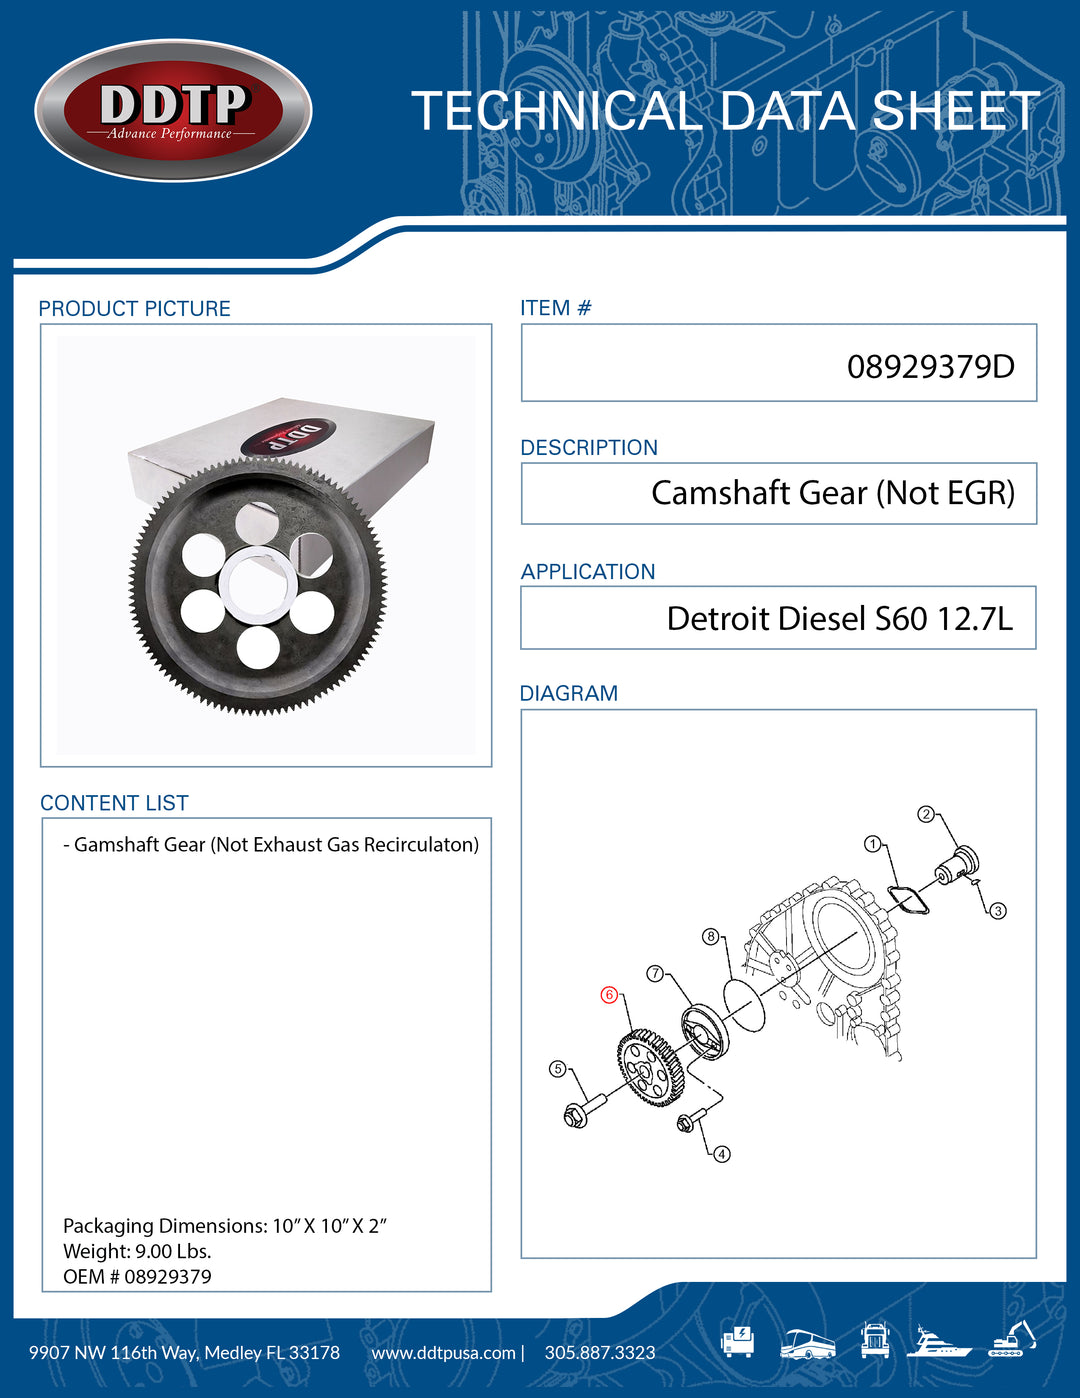 Camshaft Gear S60 12.7L not EGR (08929379)